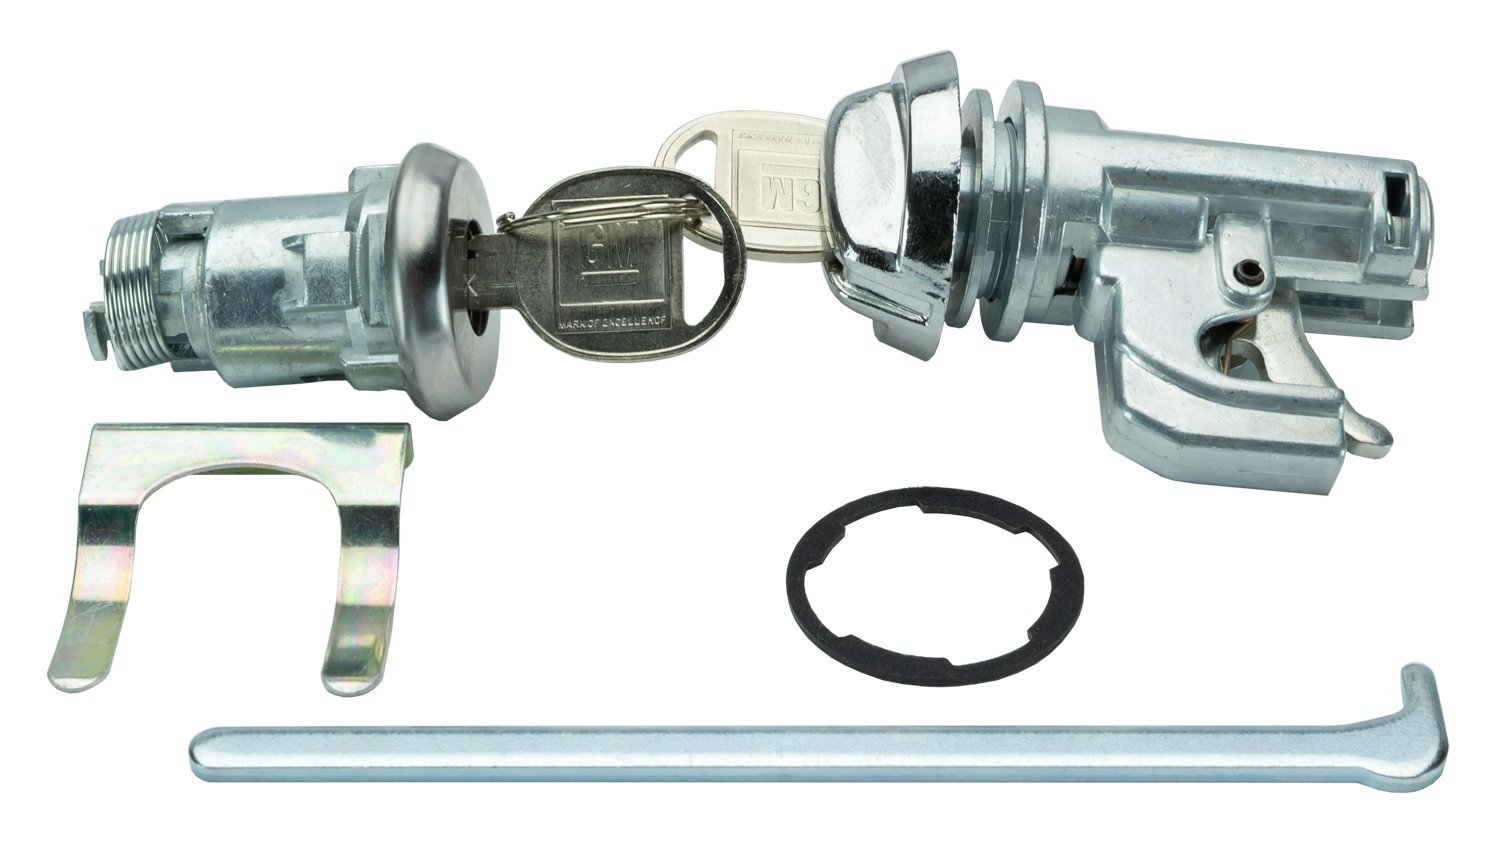 Trunk & Glovebox Lock Set Fits Select 1970-1981 GM Models [Oval Style GM Keys]